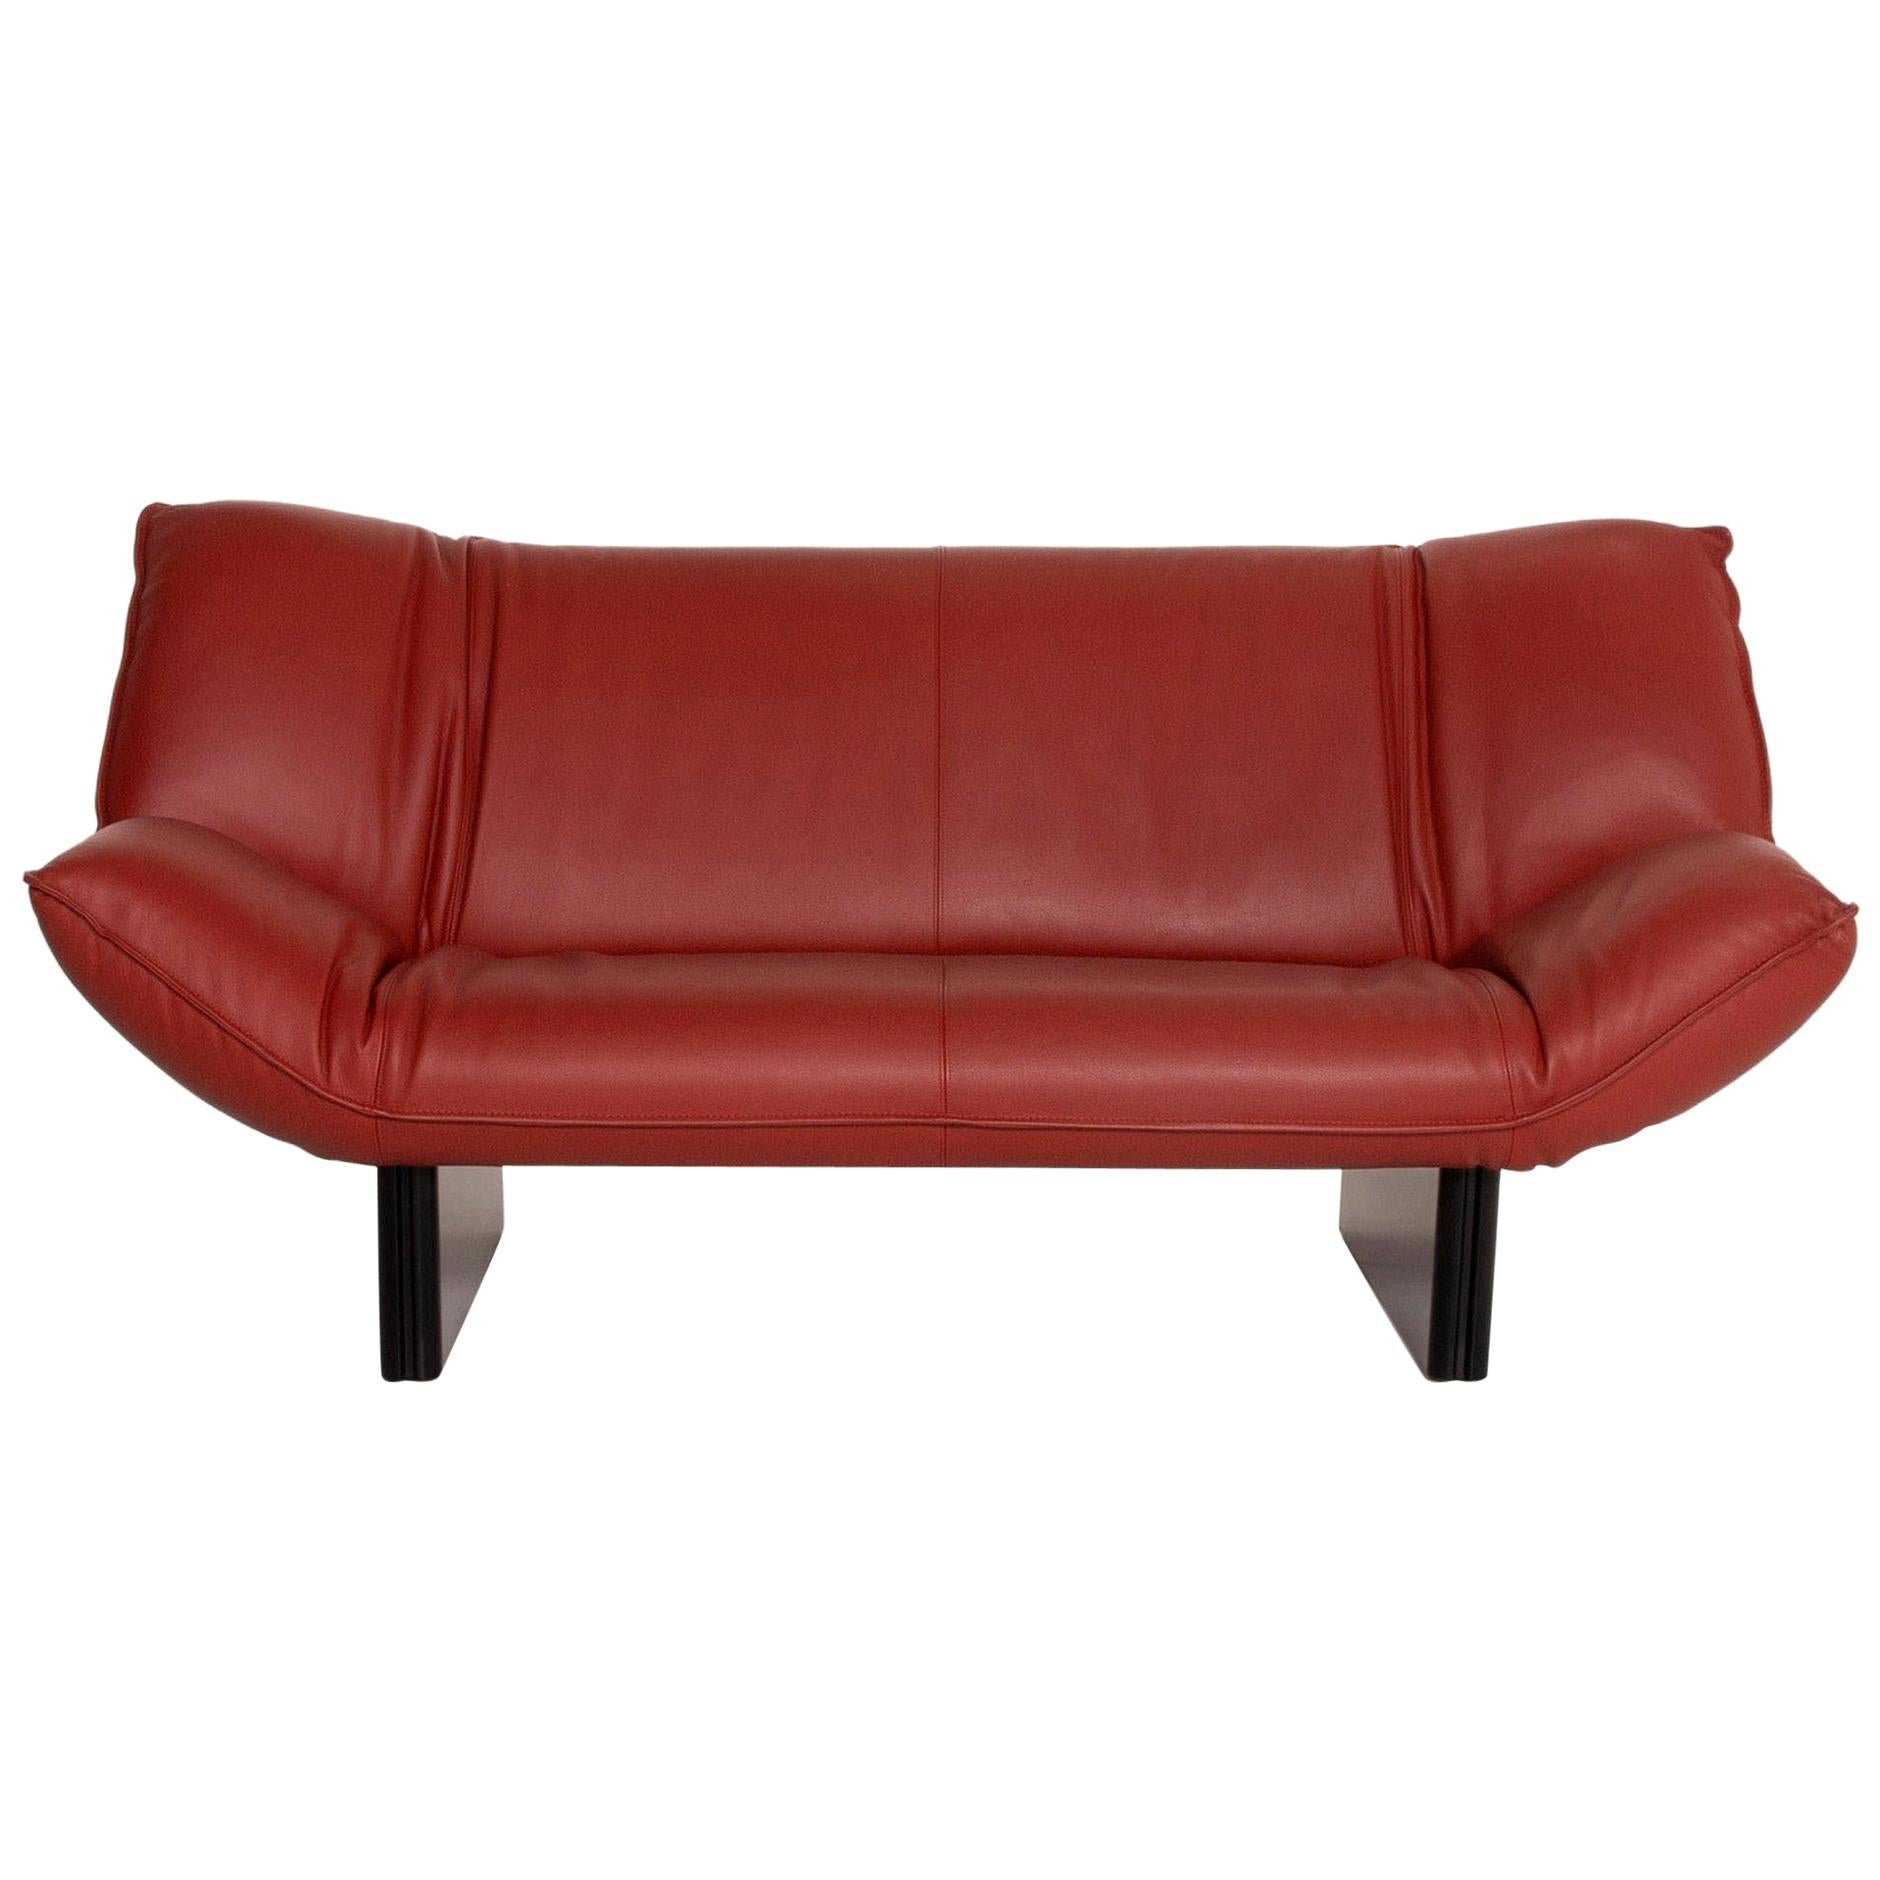 Leolux Tango Leather Sofa Dark Red Three-Seat For Sale